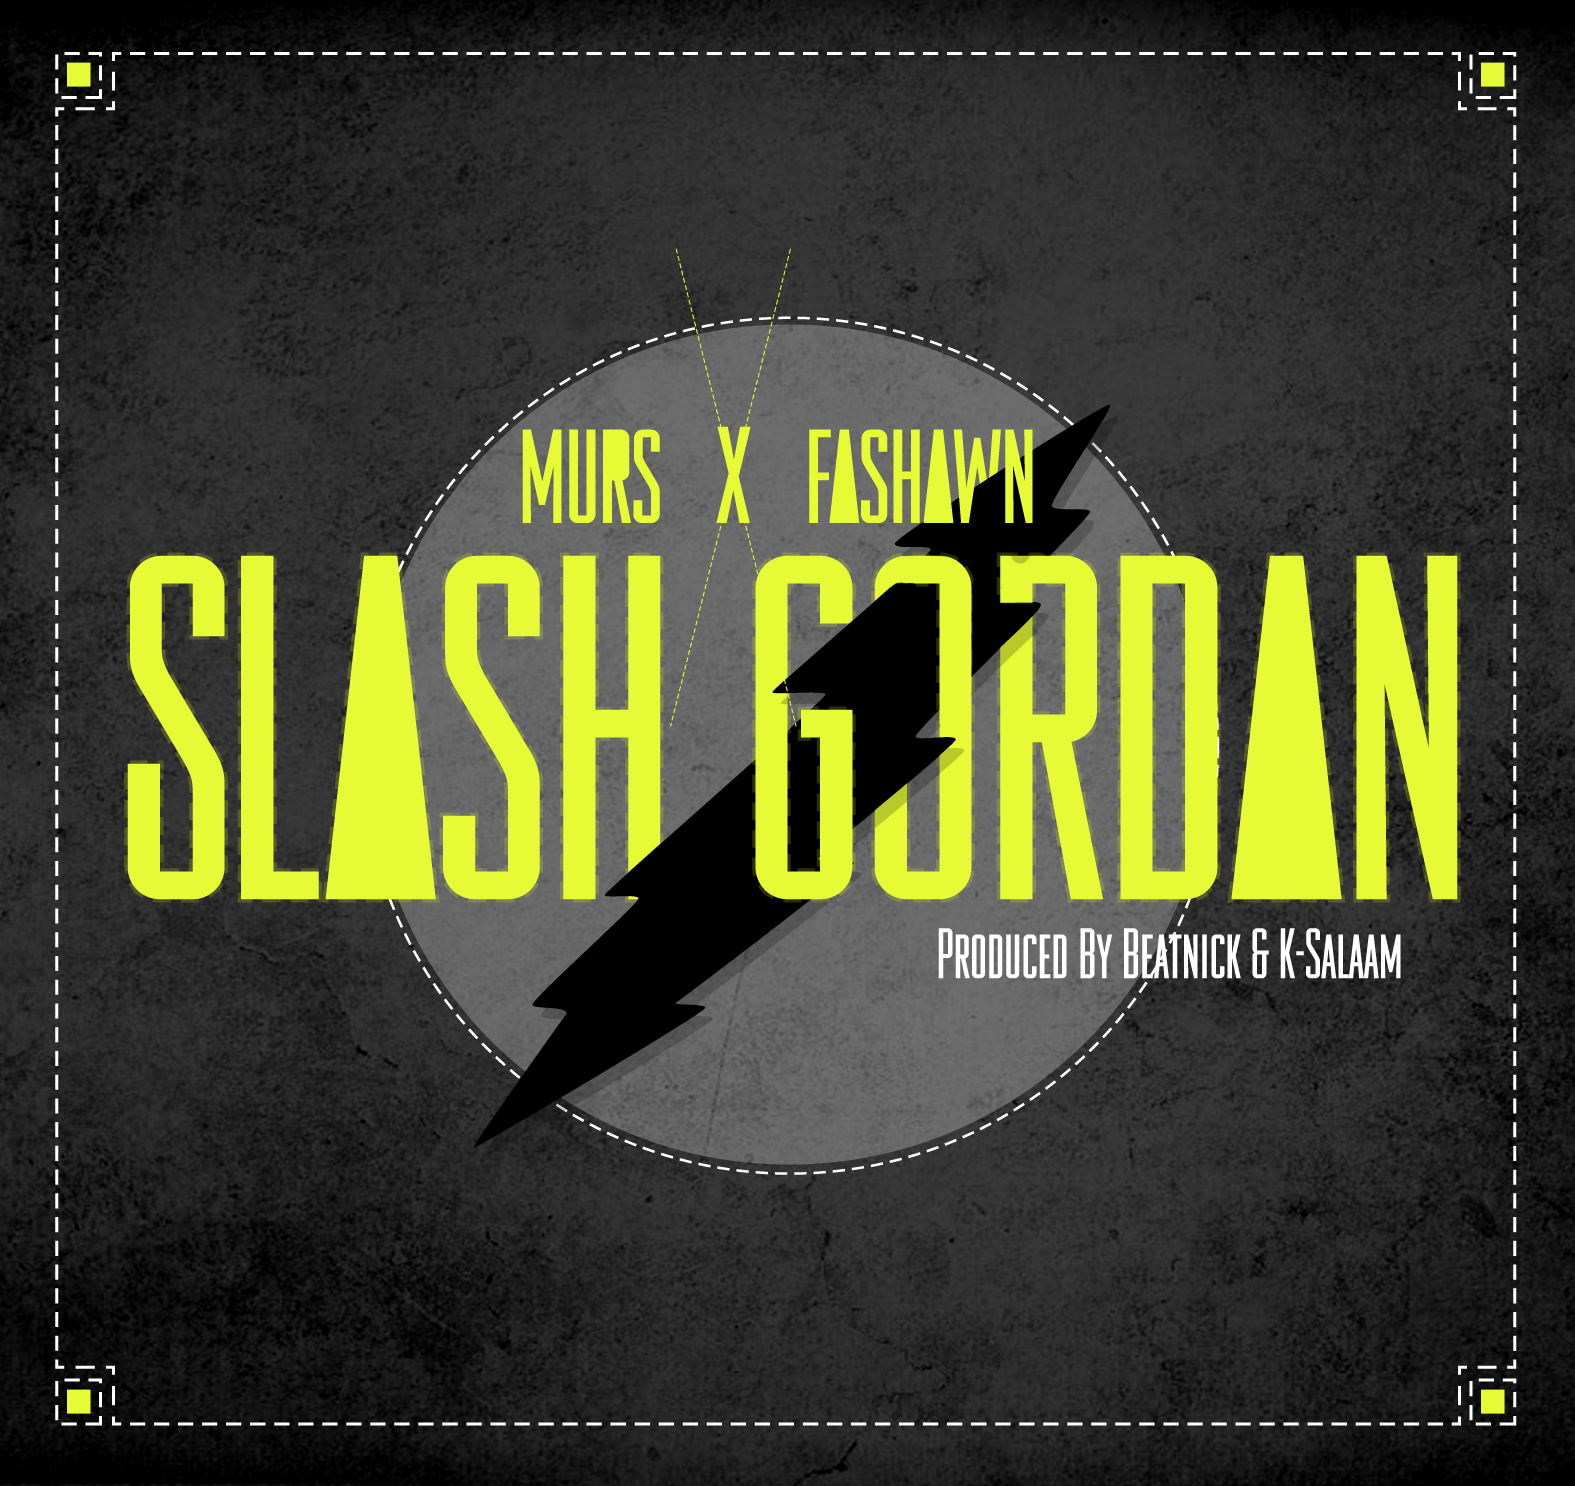 Murs & Fashawn - "Slash Gordon"